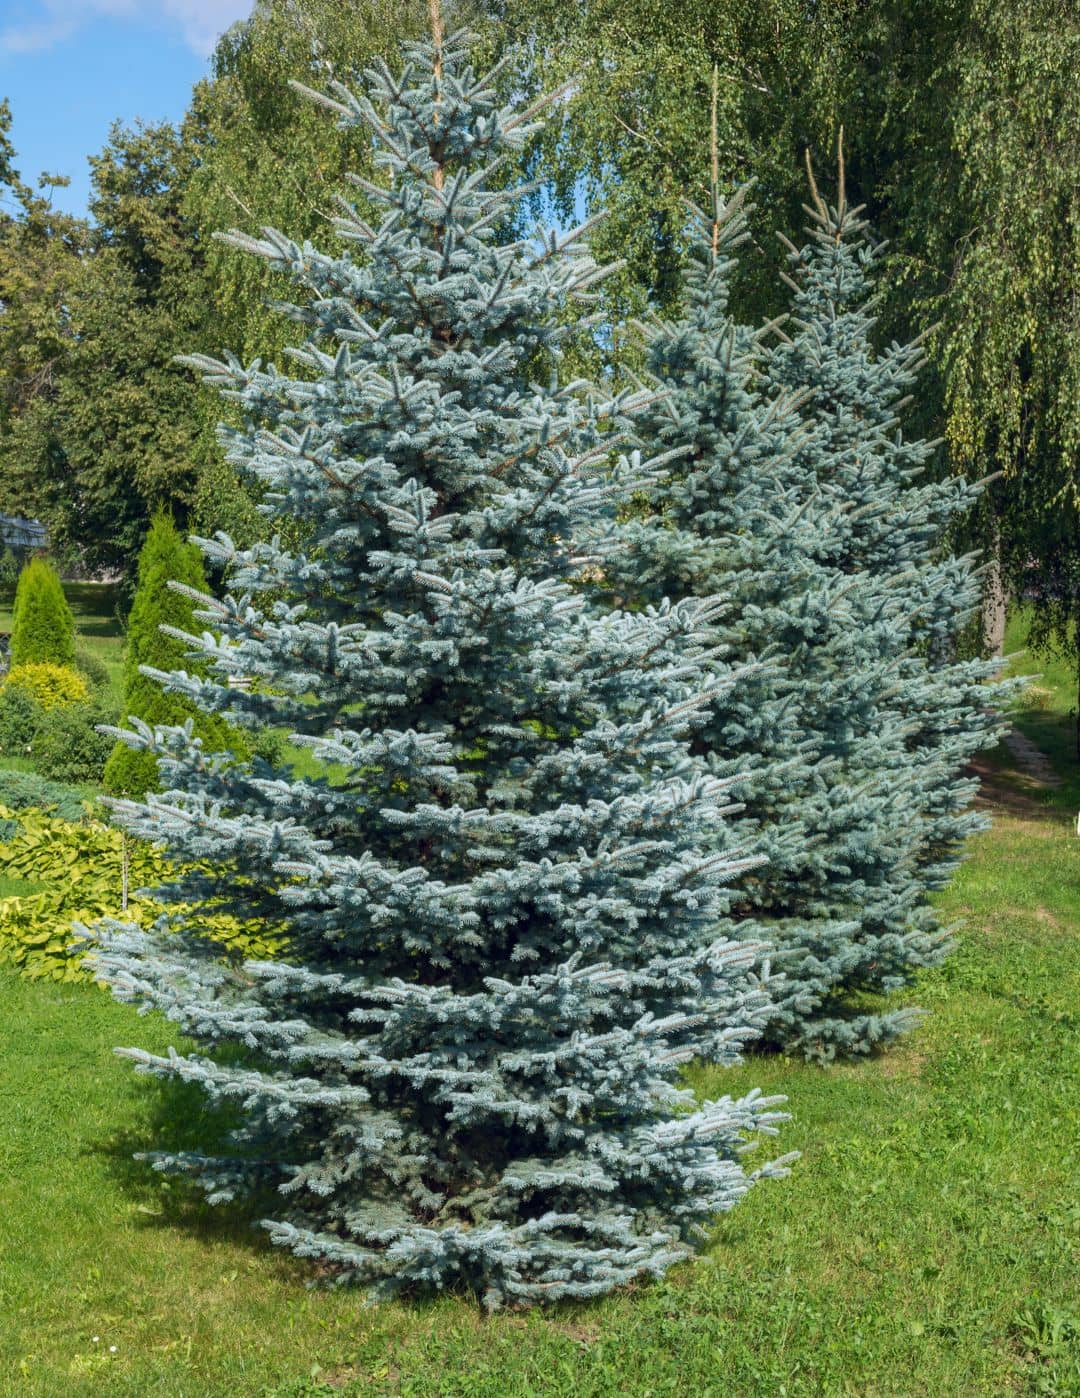 Colorado Blue Spruce tree